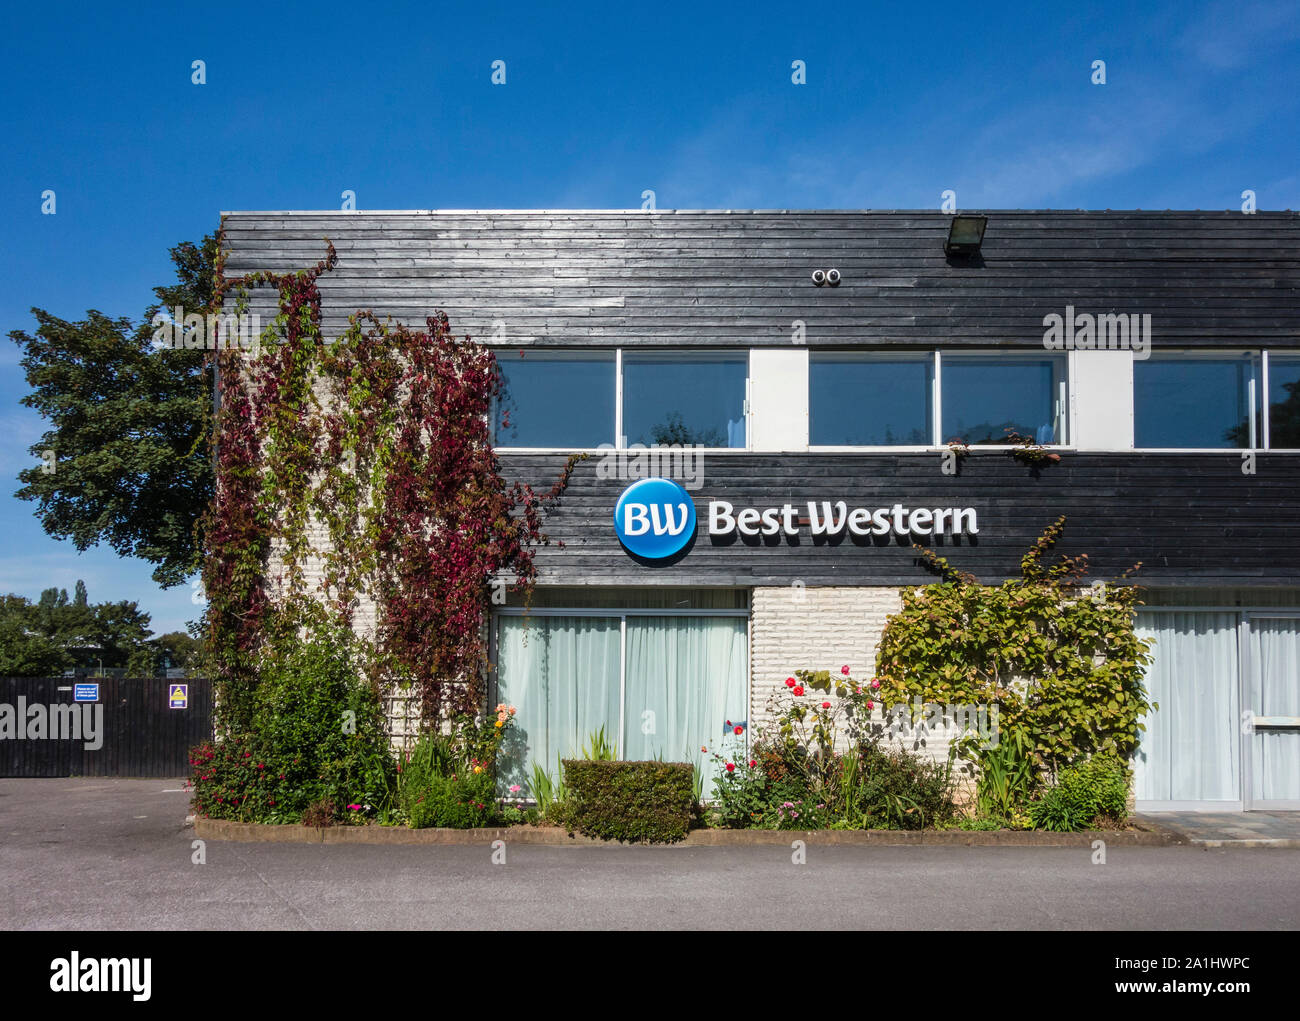 Best Western Hotel exterior at Tiverton, Devon, England, UK. Stock Photo